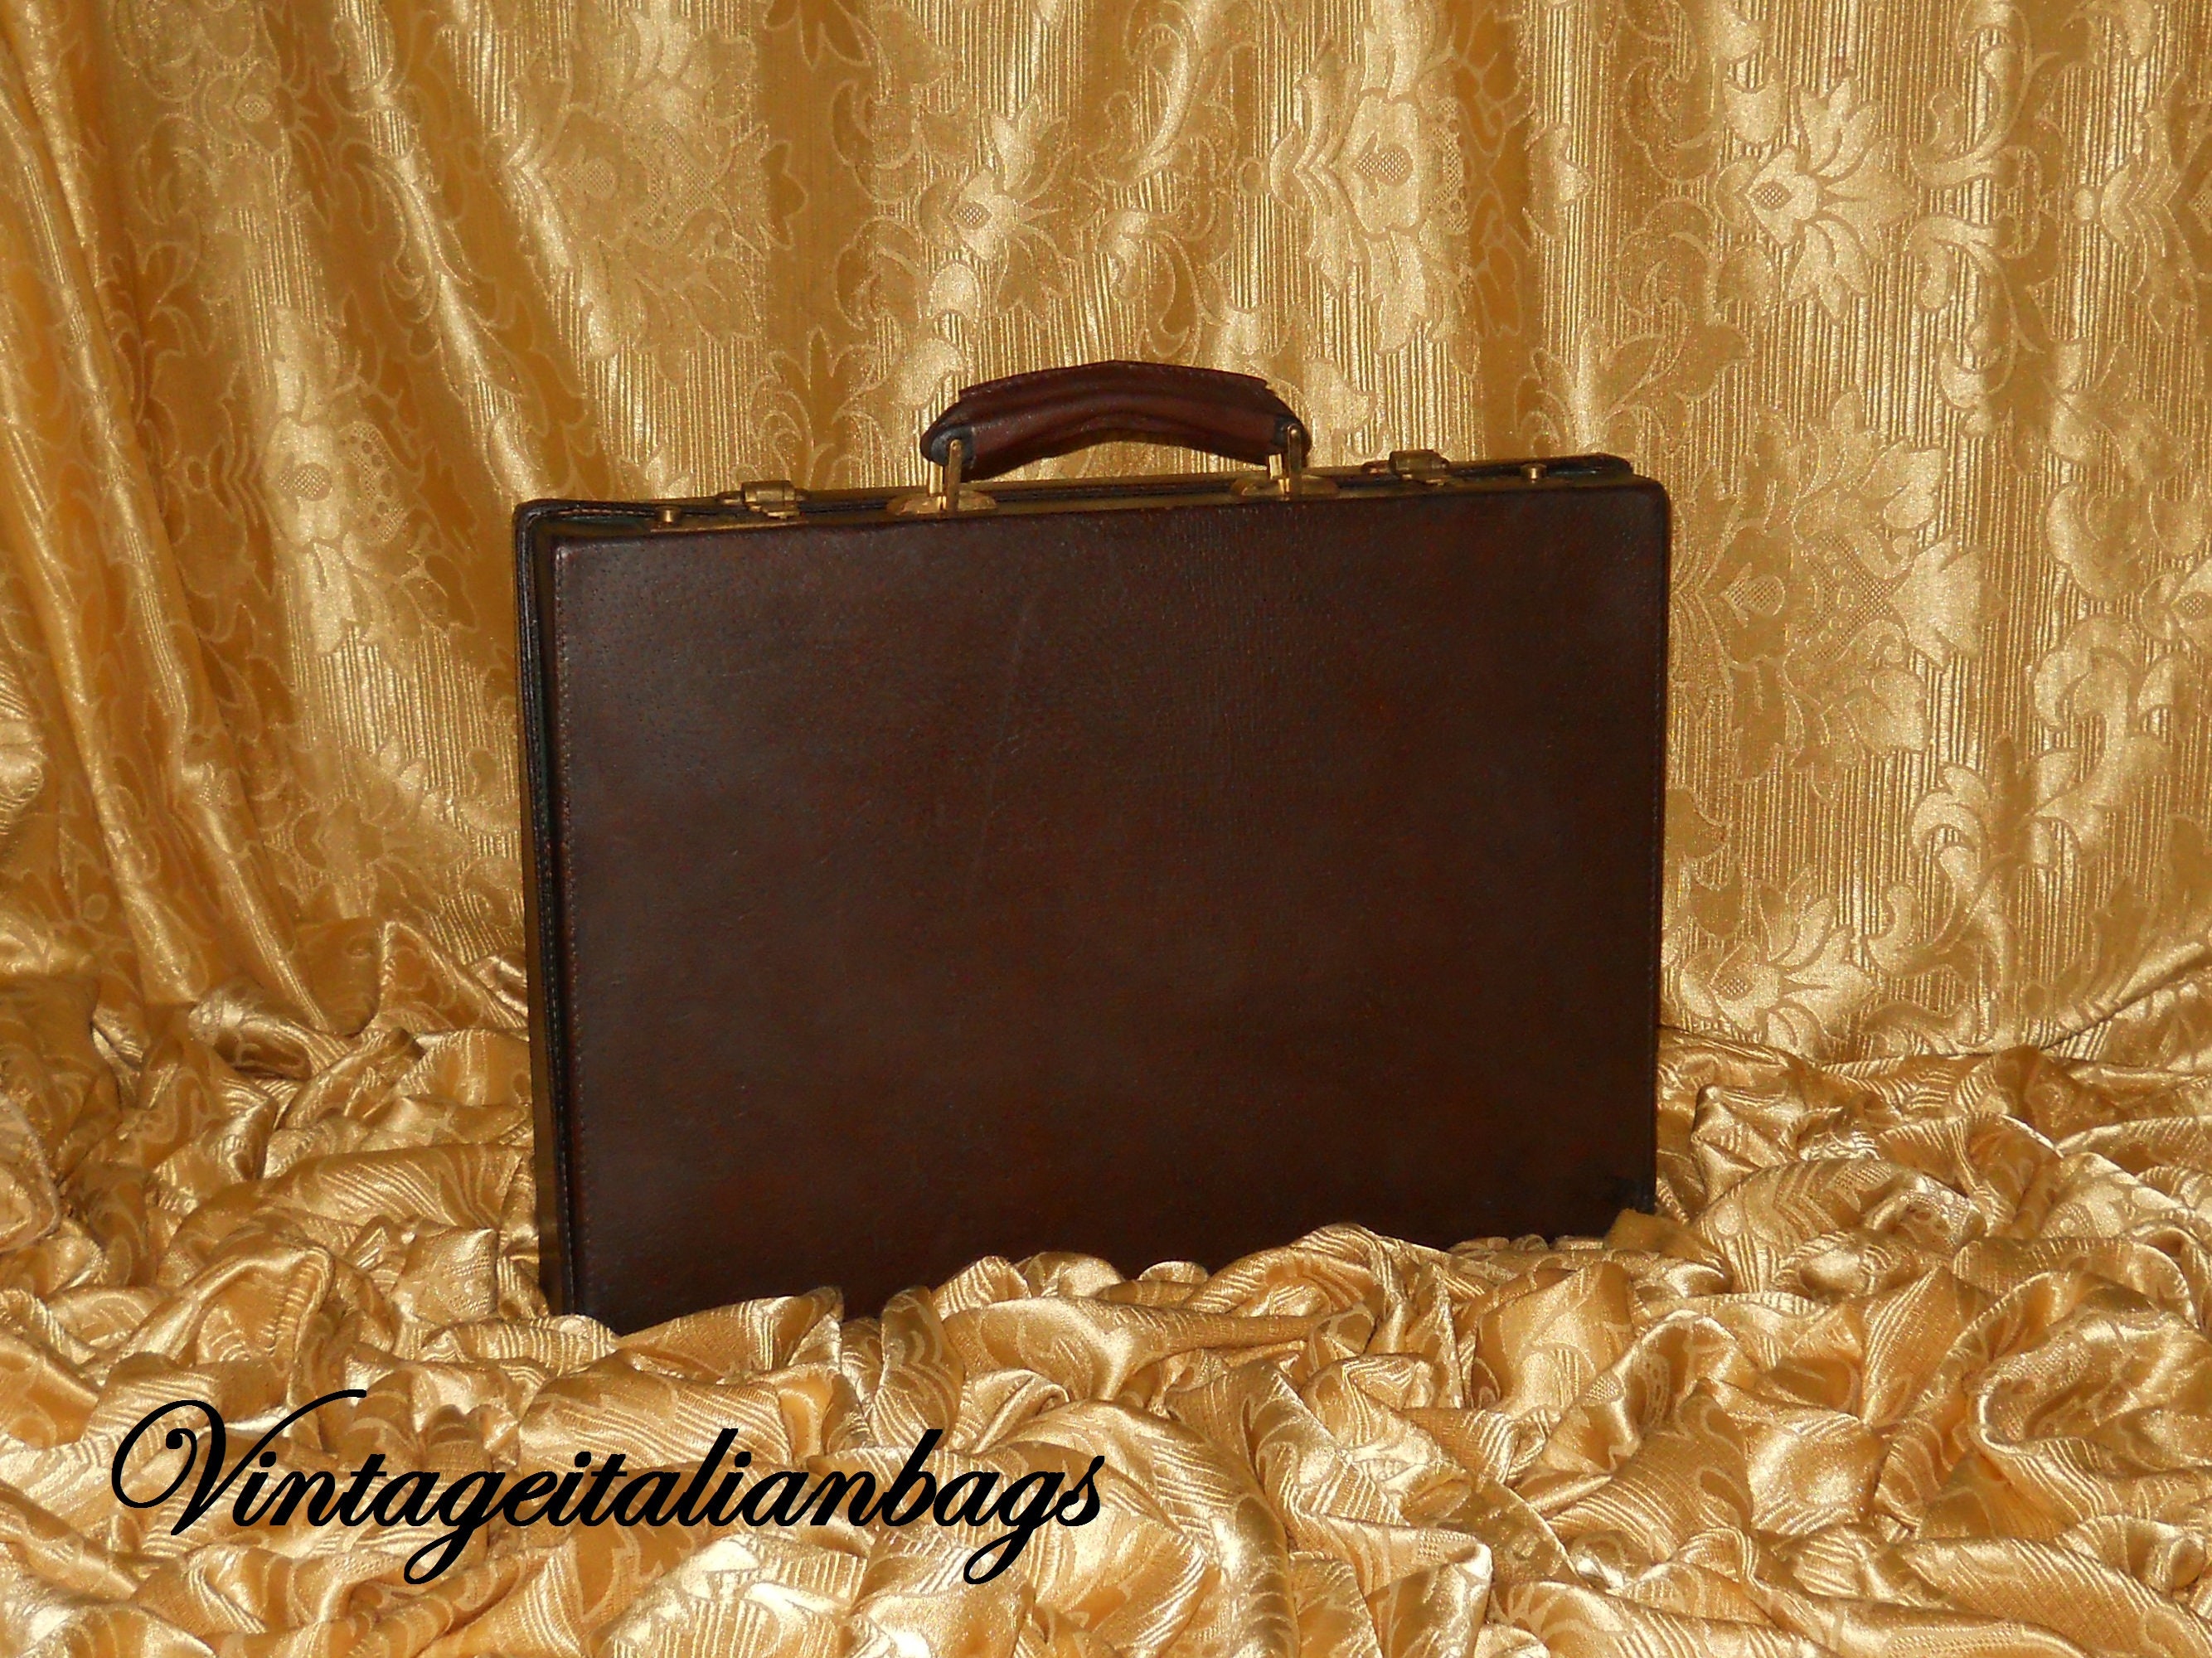 Genuine Vintage Gucci Briefcase Genuine Leather 